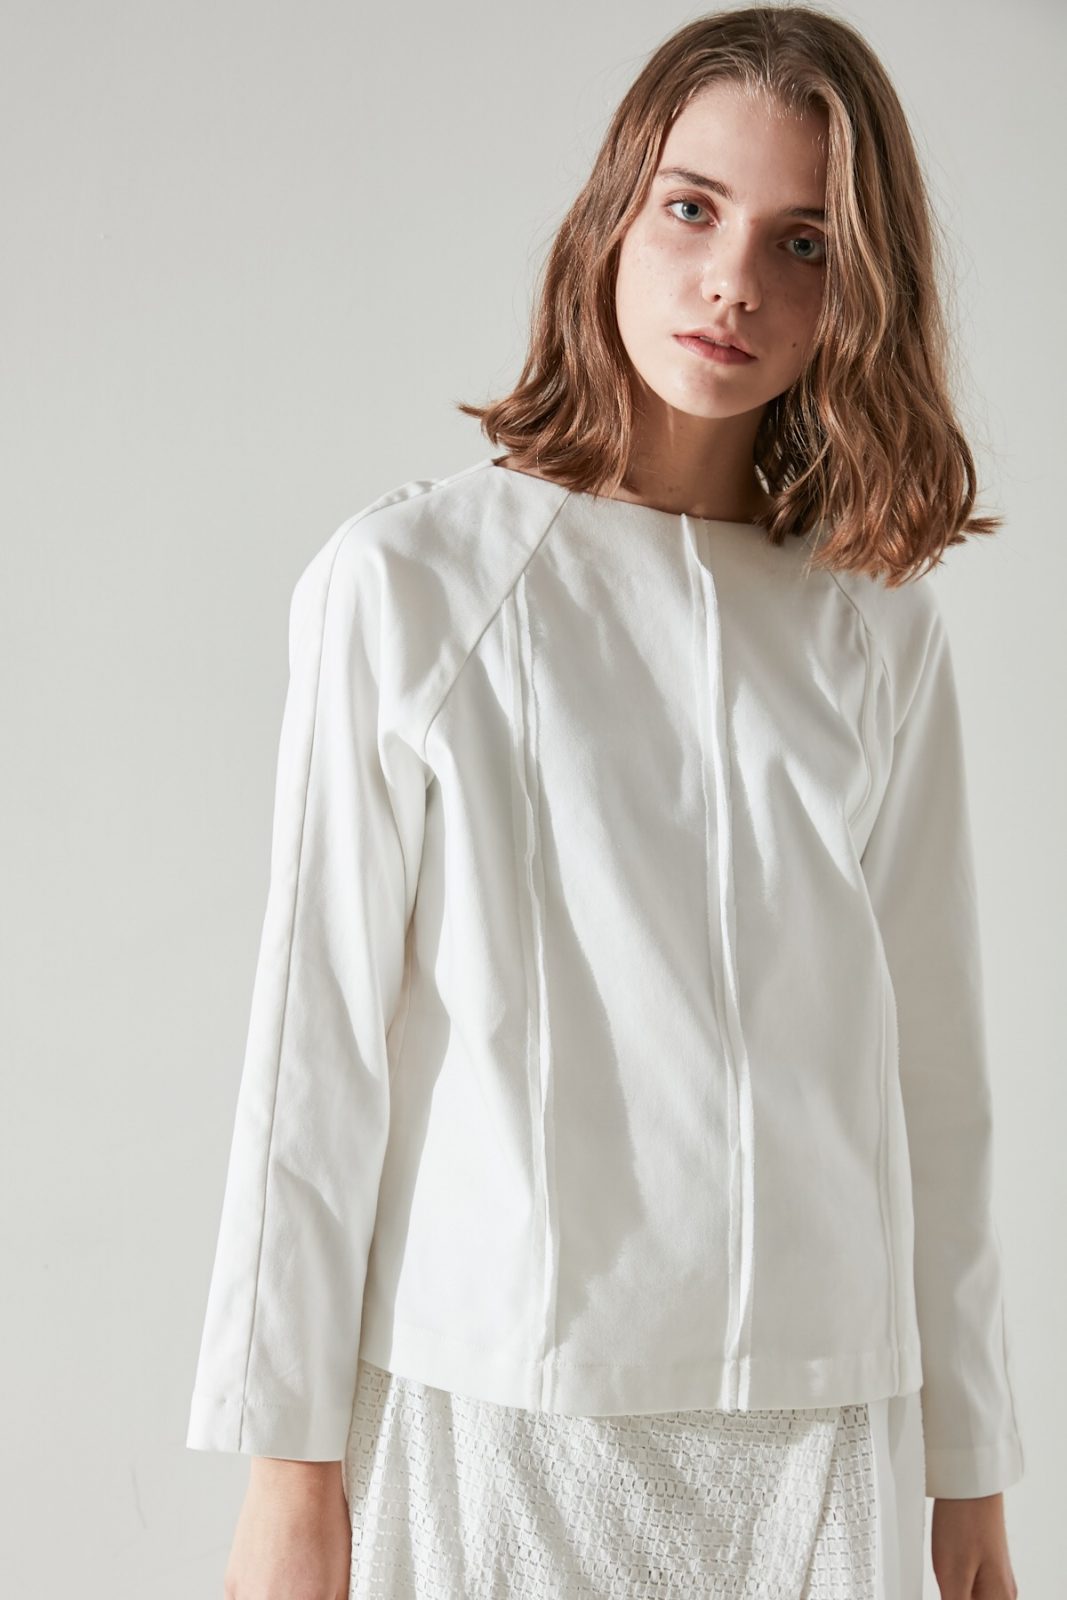 SKYE minimalist women clothing fashion Kate Chiffon Blouse Top white 6